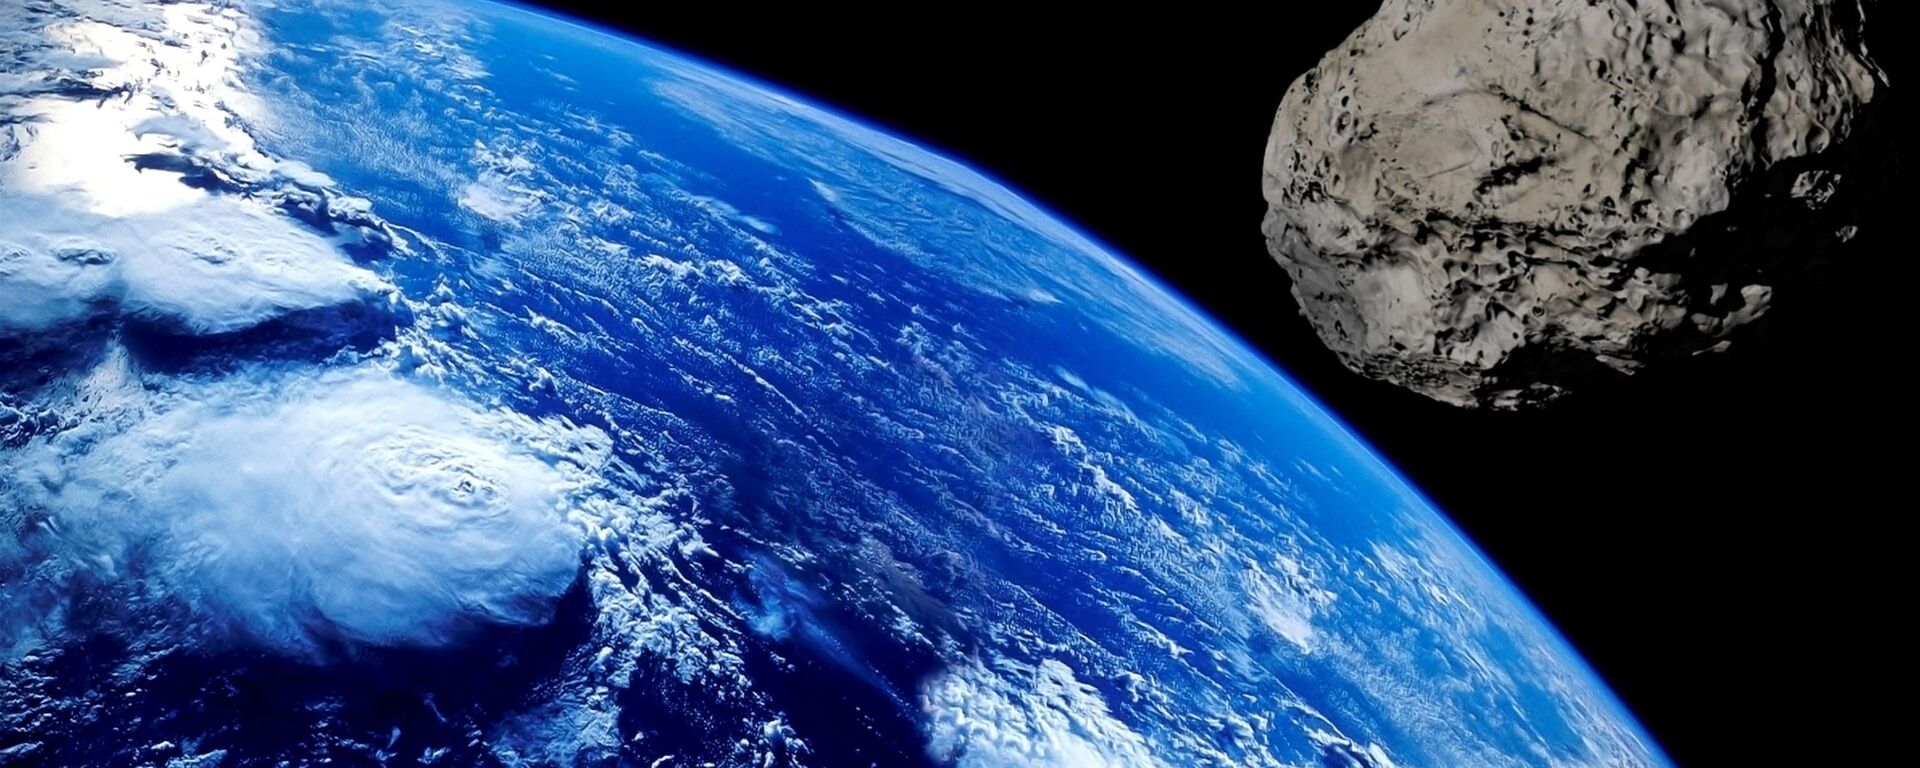 Asteroid and the Earth - Sputnik International, 1920, 27.09.2021